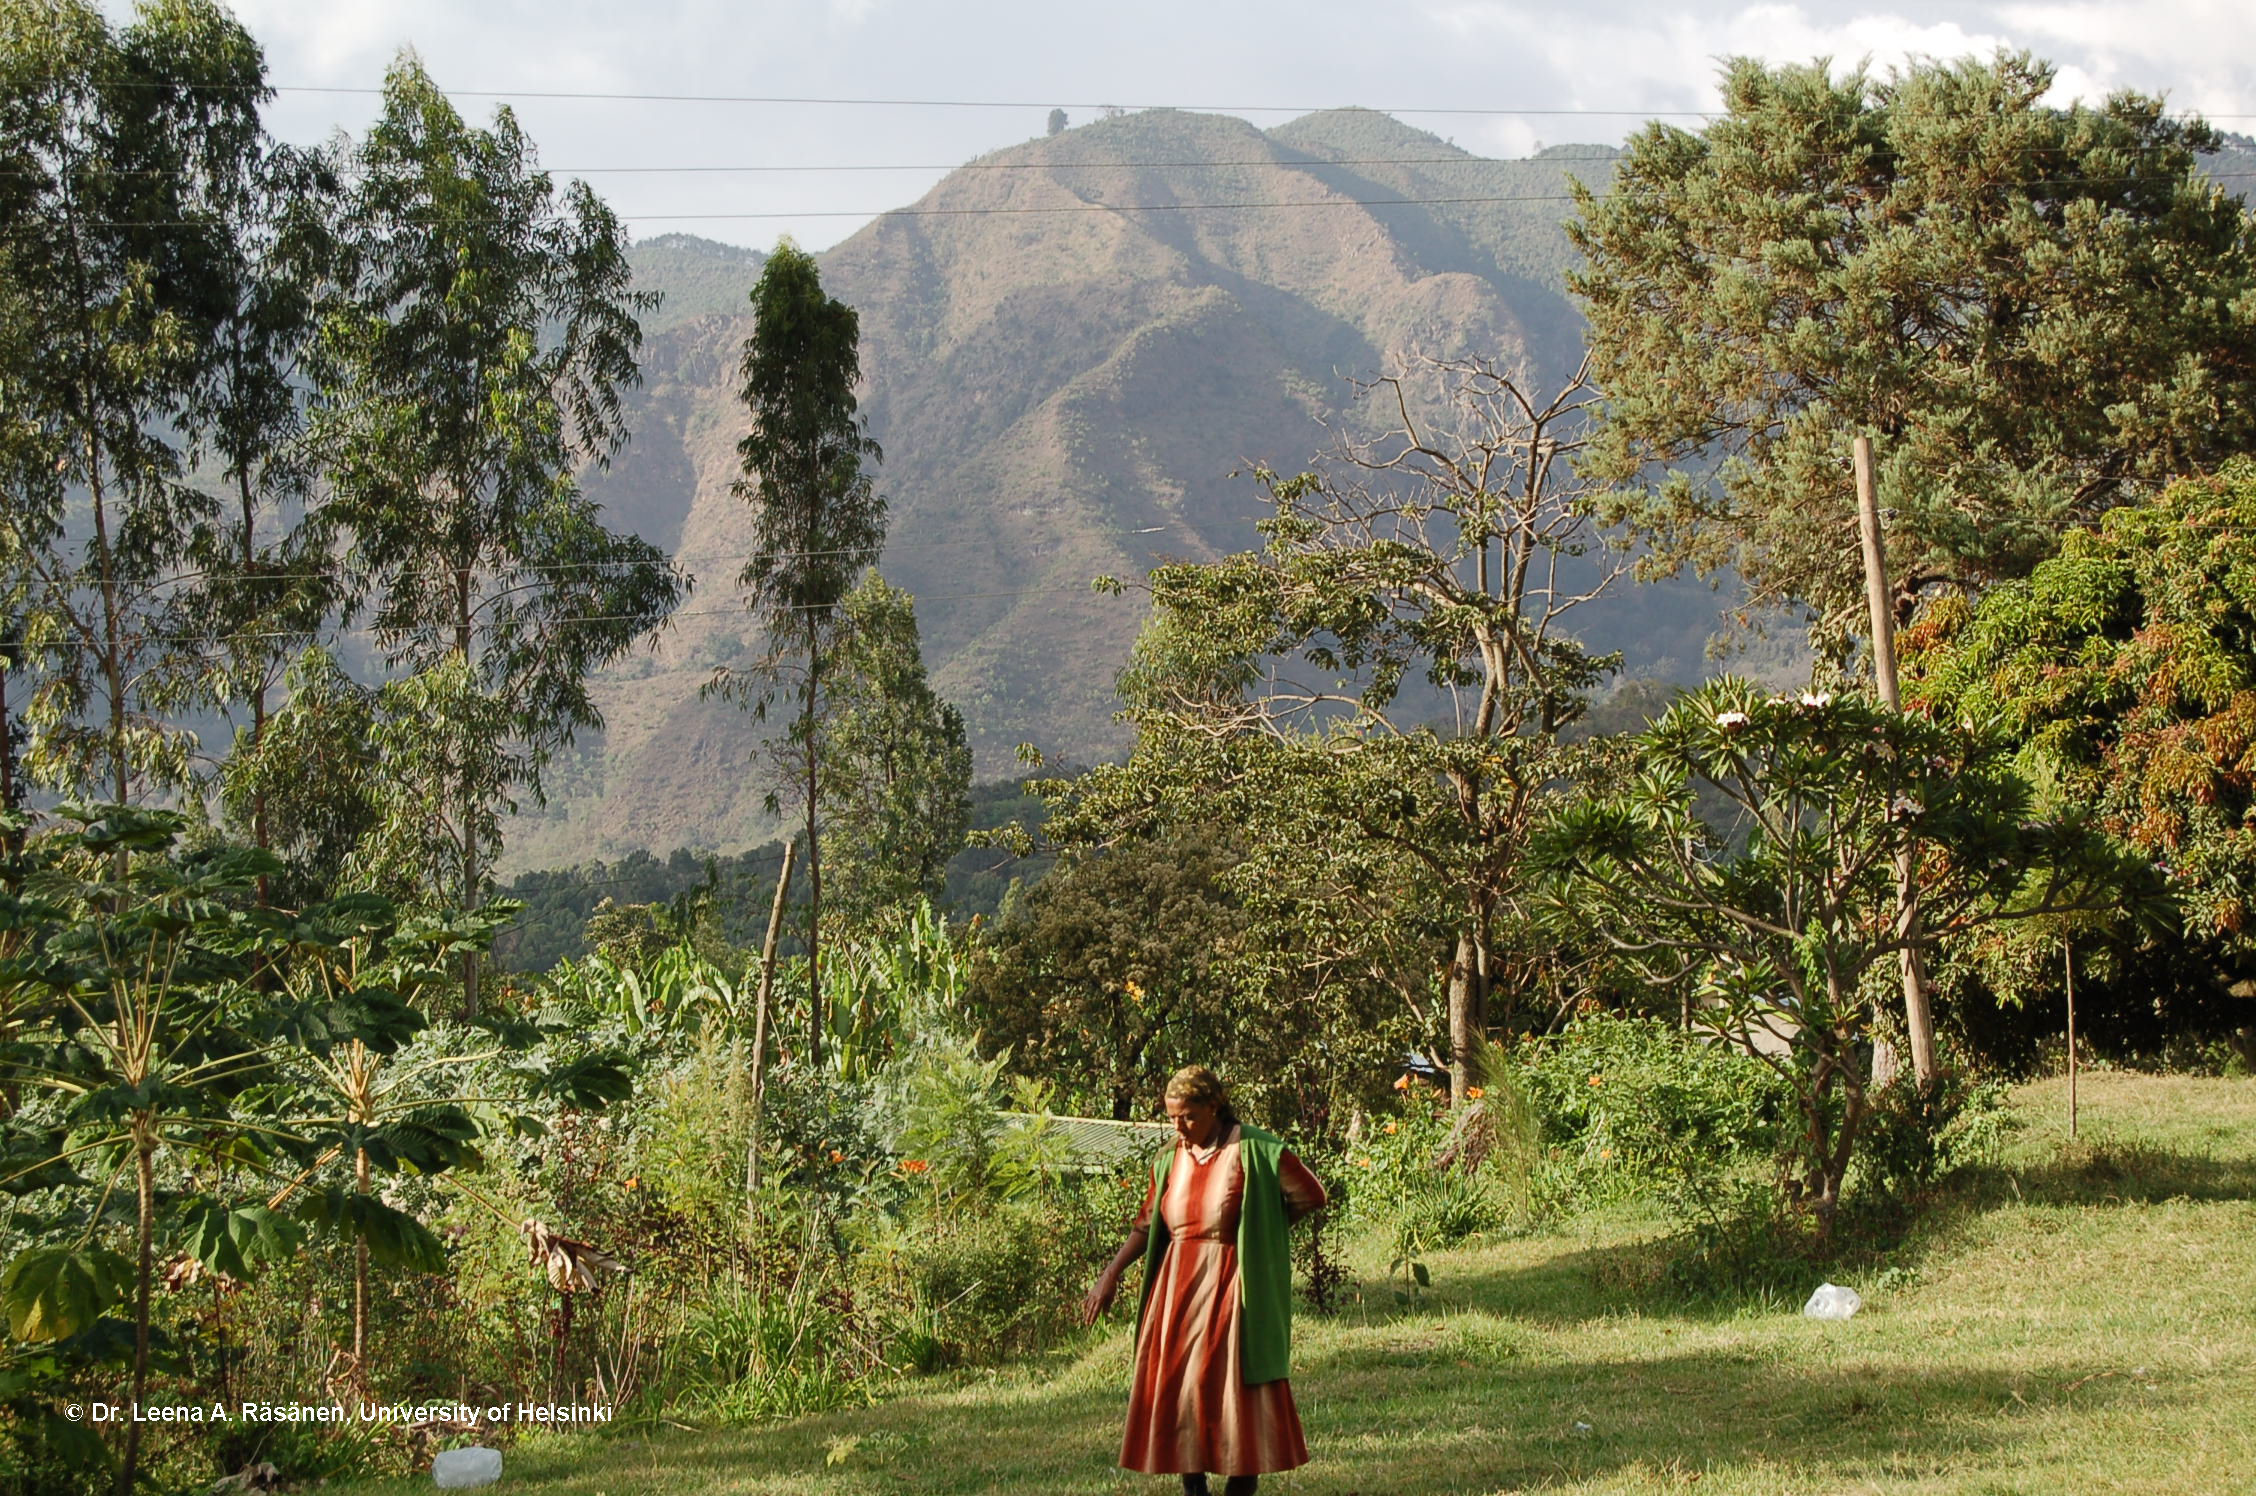 2256x1496 Women in homegarden, Ethiopia